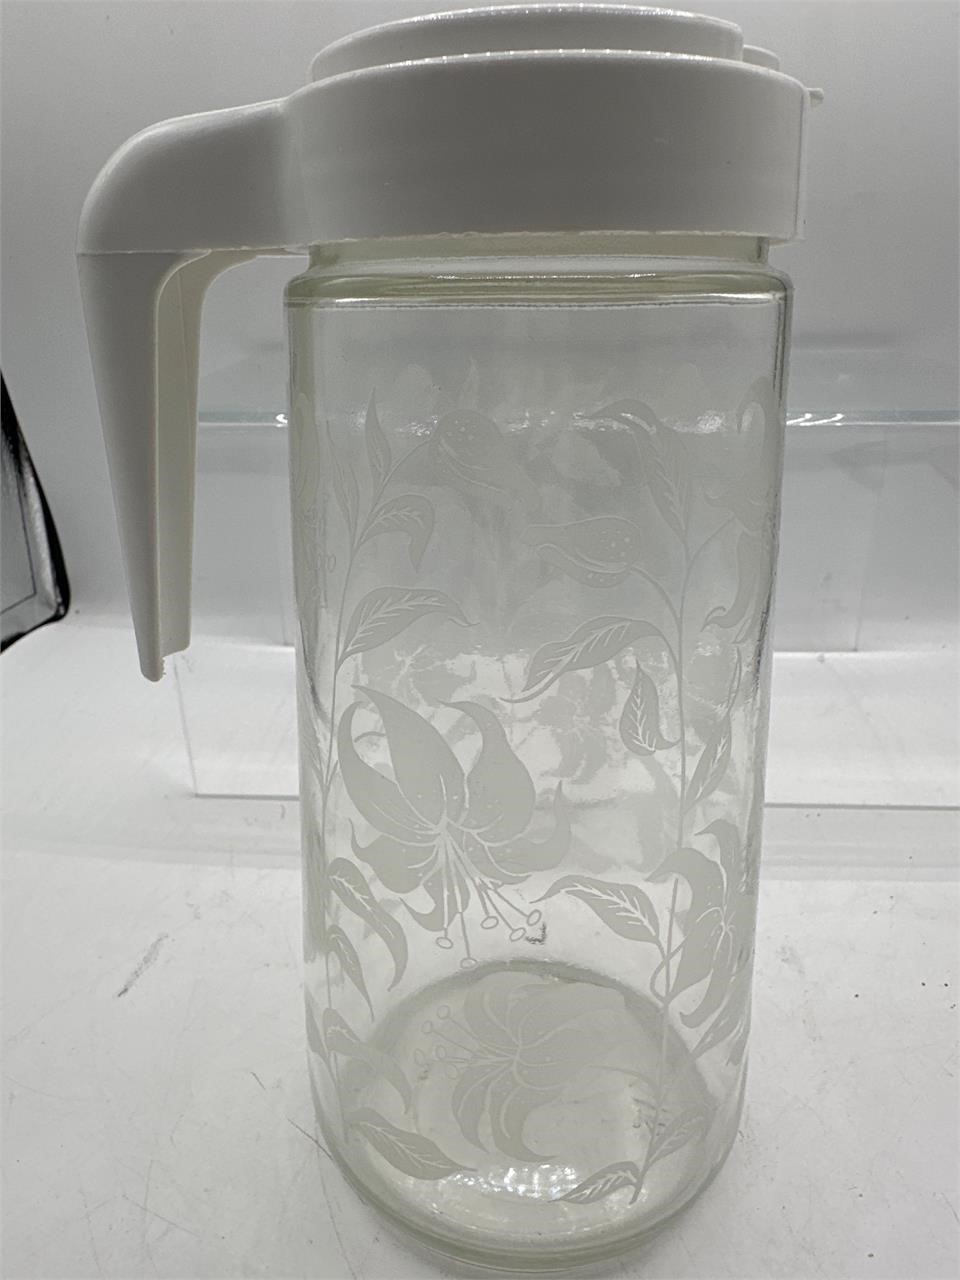 Vintage Tang pitcher glass